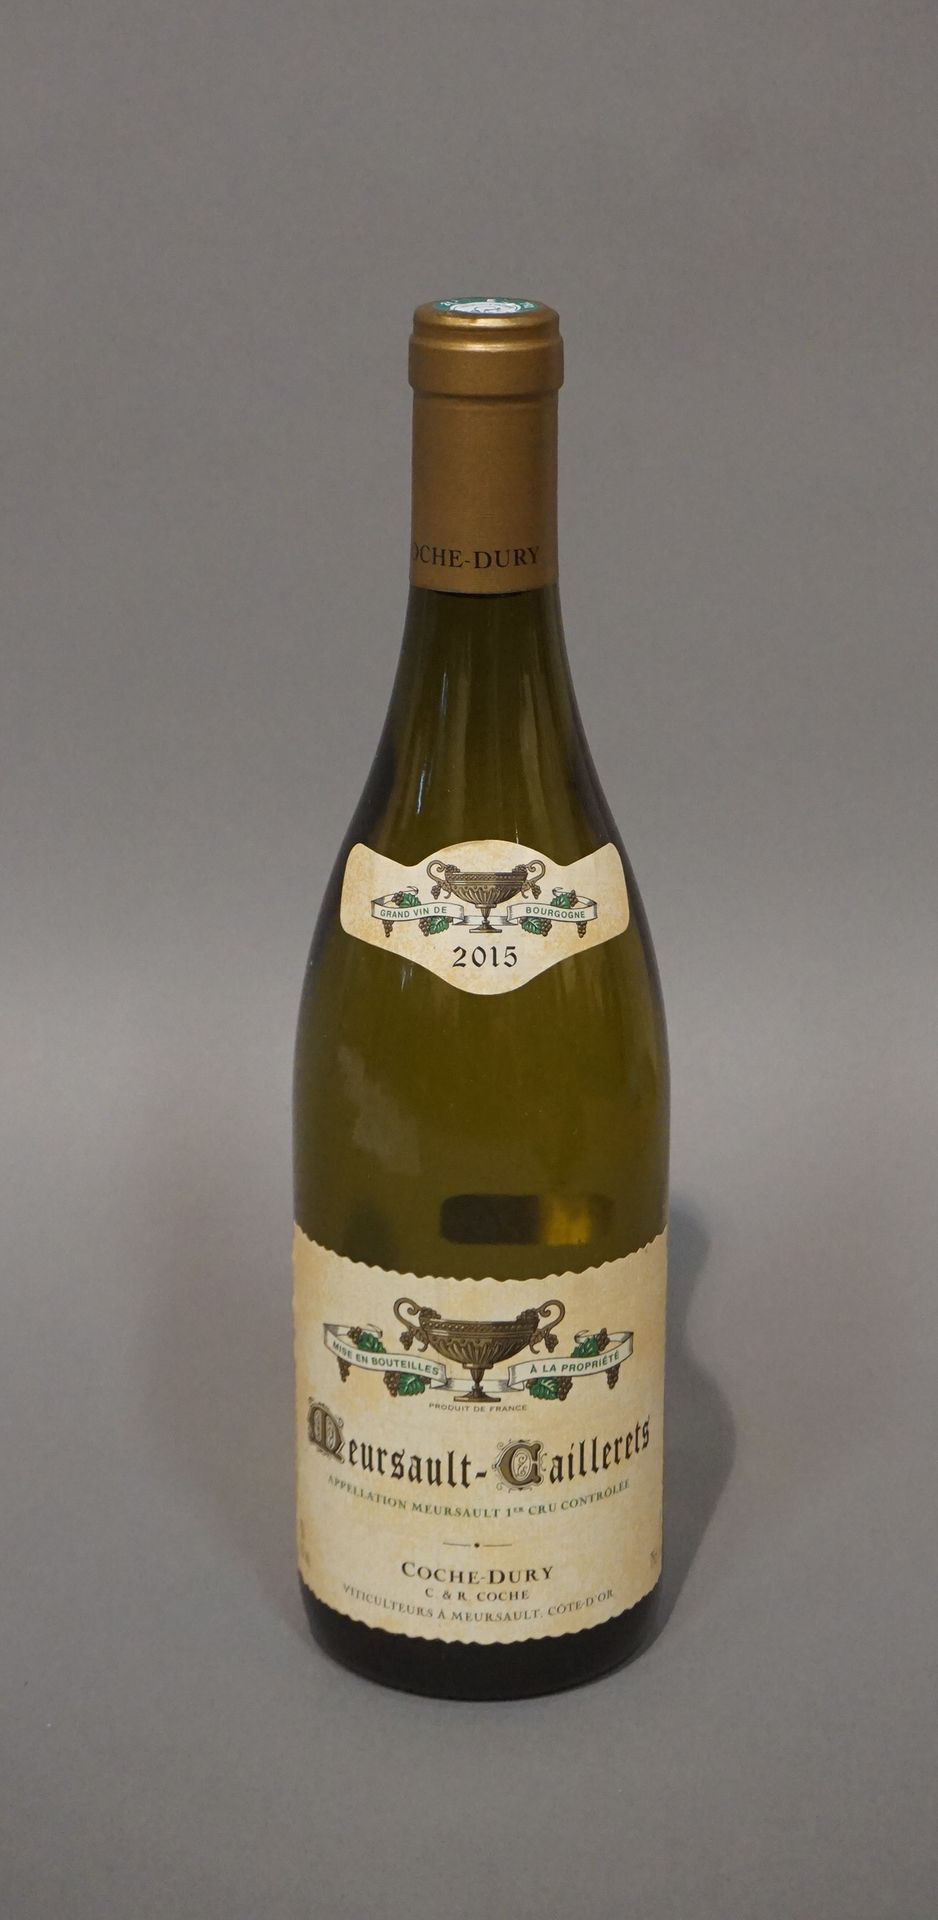 Null 1 bottle MEURSAULT "Caillerets 1er cru", Coche-Dury 2015